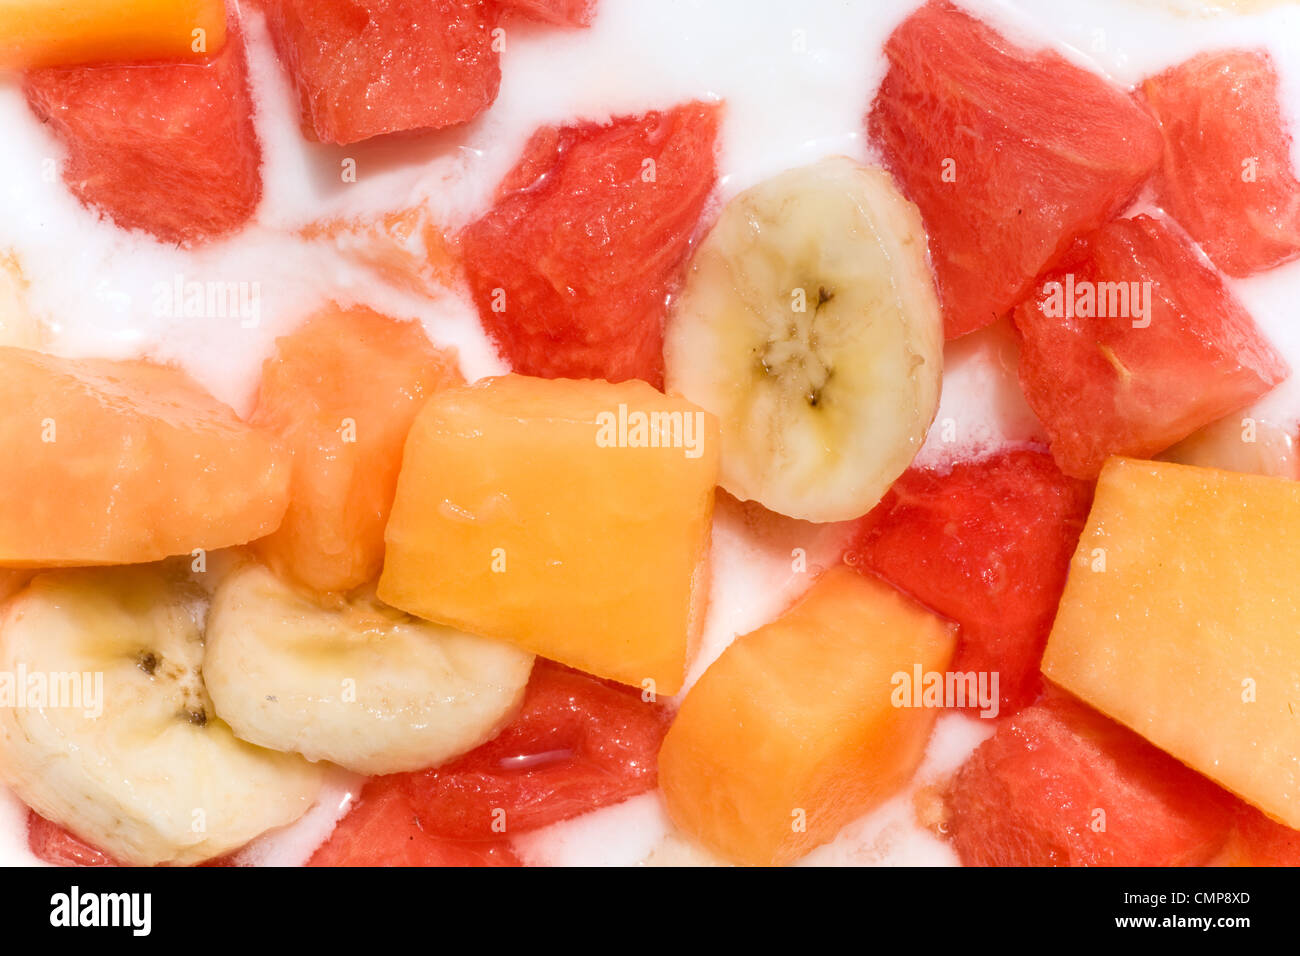 Fresh Mixed Fruit Salad With Banana Papayawatermelon In Milk Stock